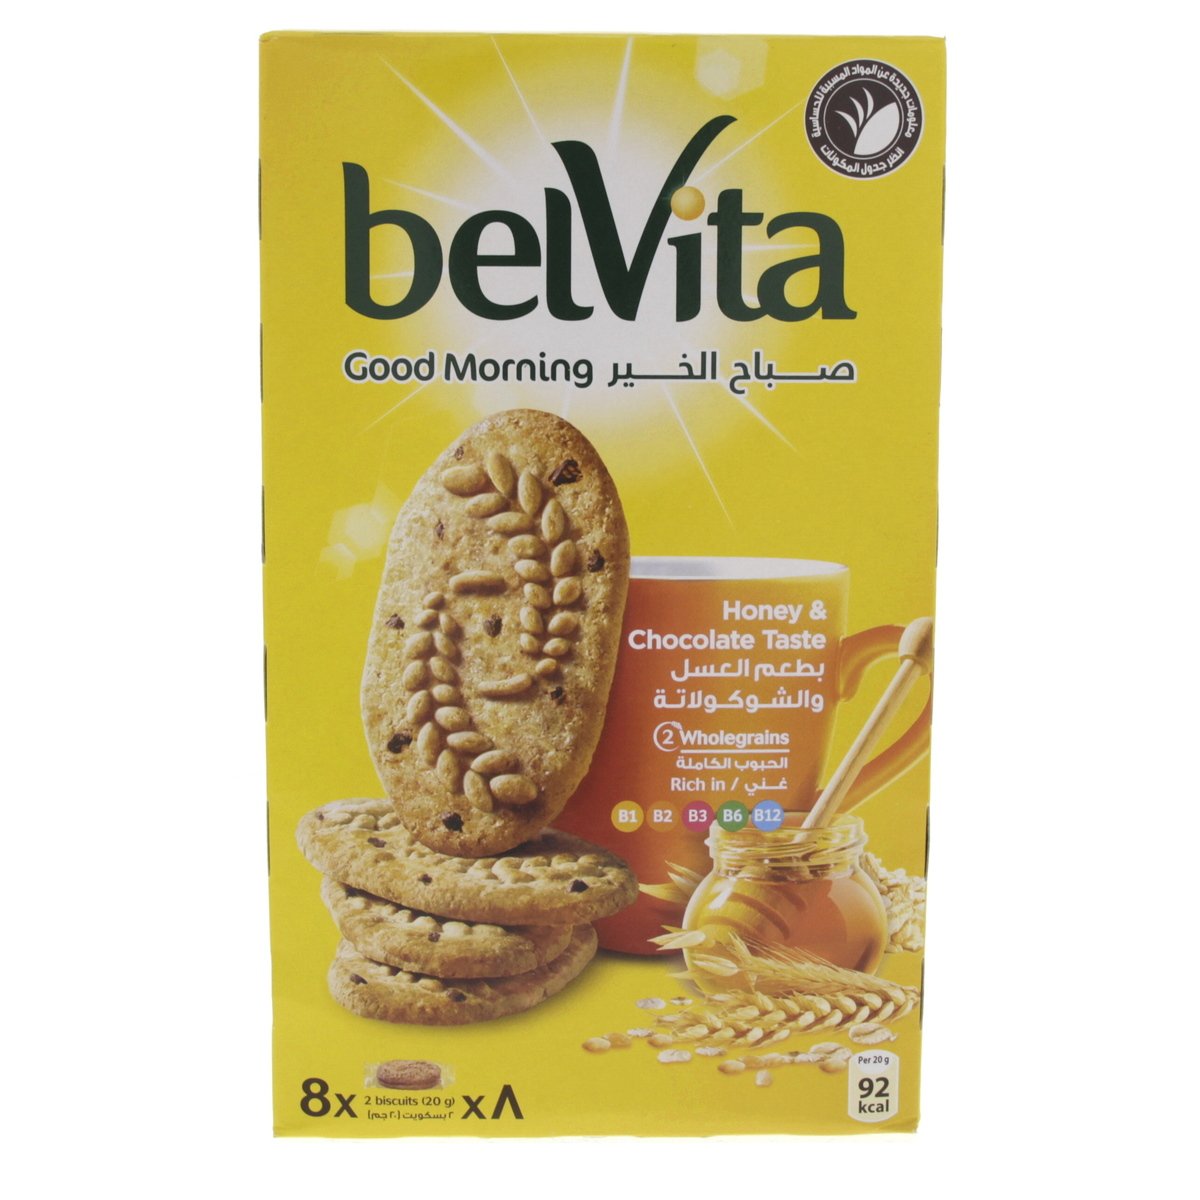 Belvita Good Morning Honey and Chocolate Taste Biscuits 160g